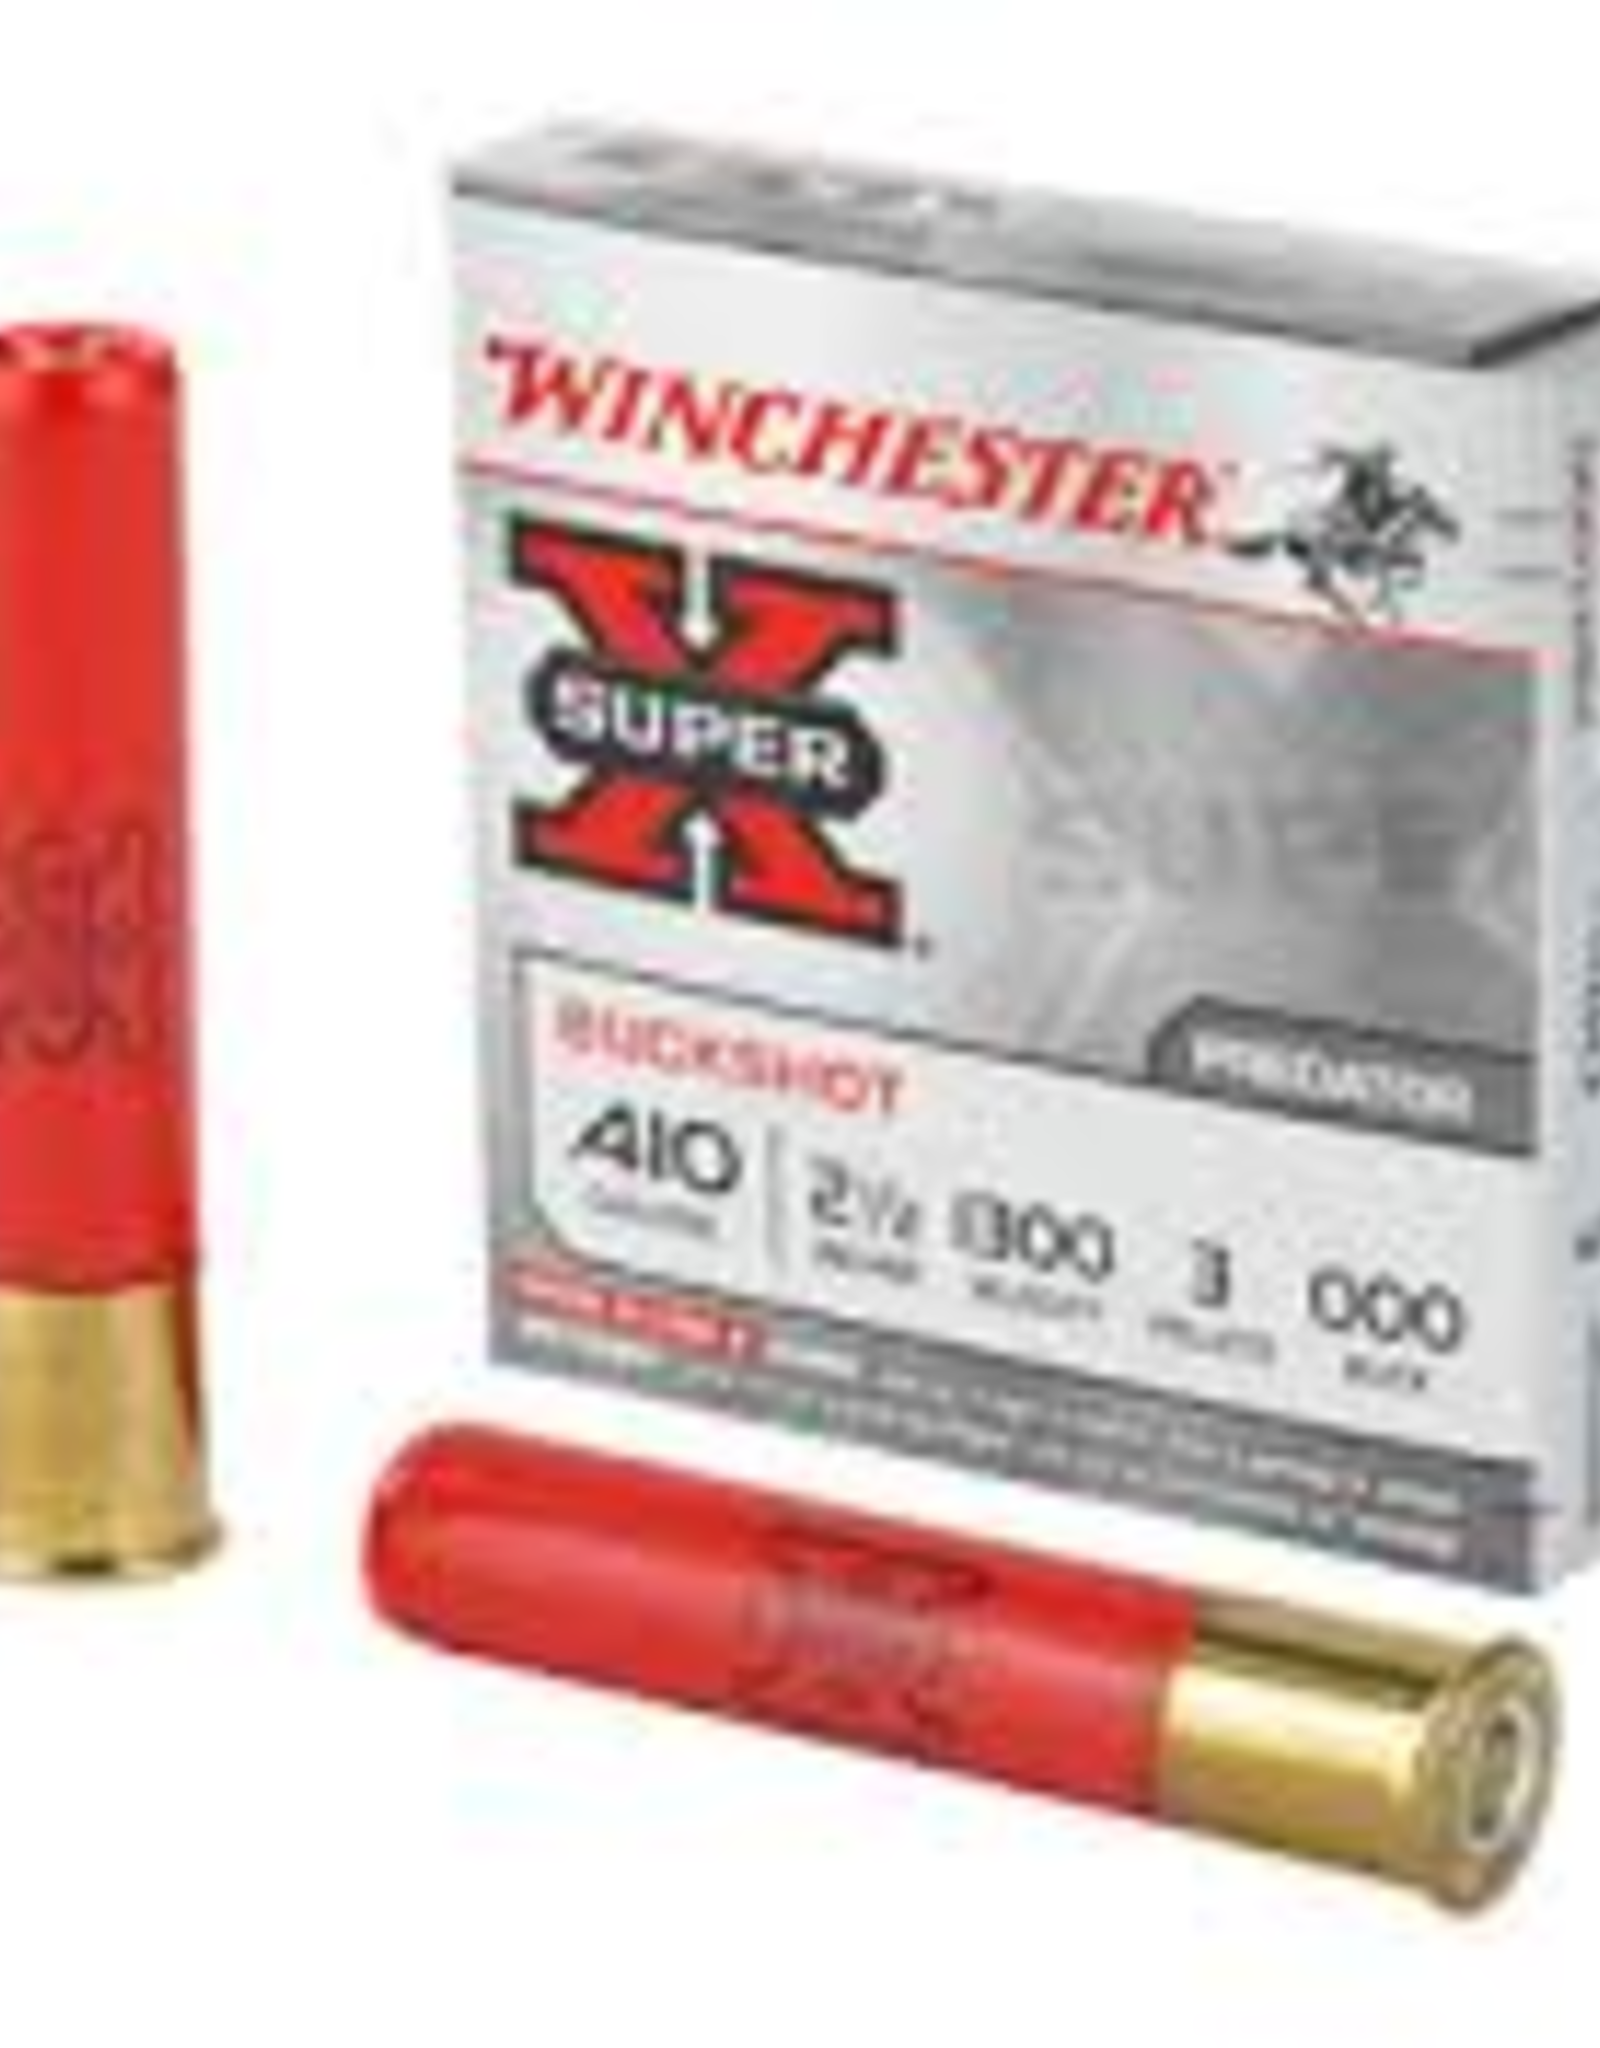 Winchester Super X Shot Shells